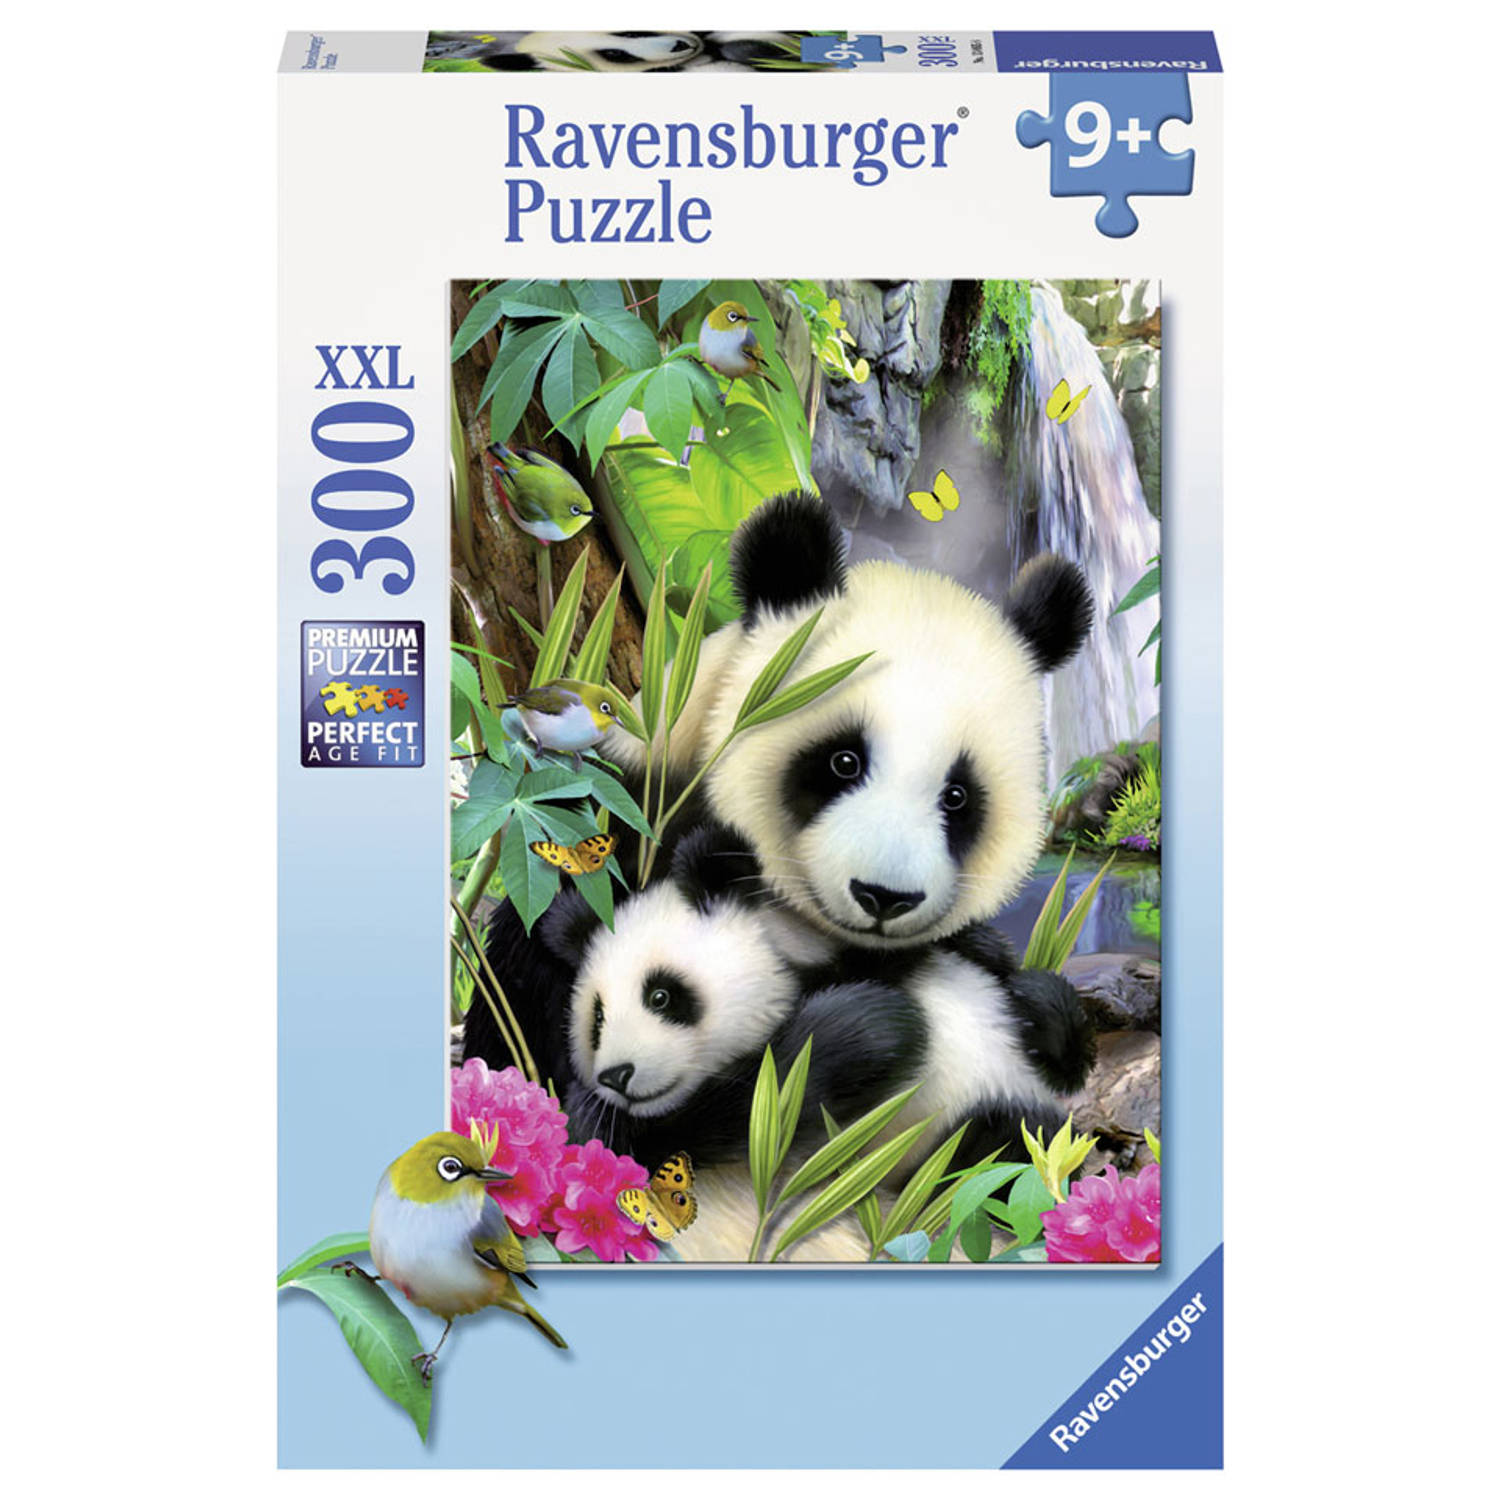 Ravensburger puzzel Lieve Panda 300 stukjes